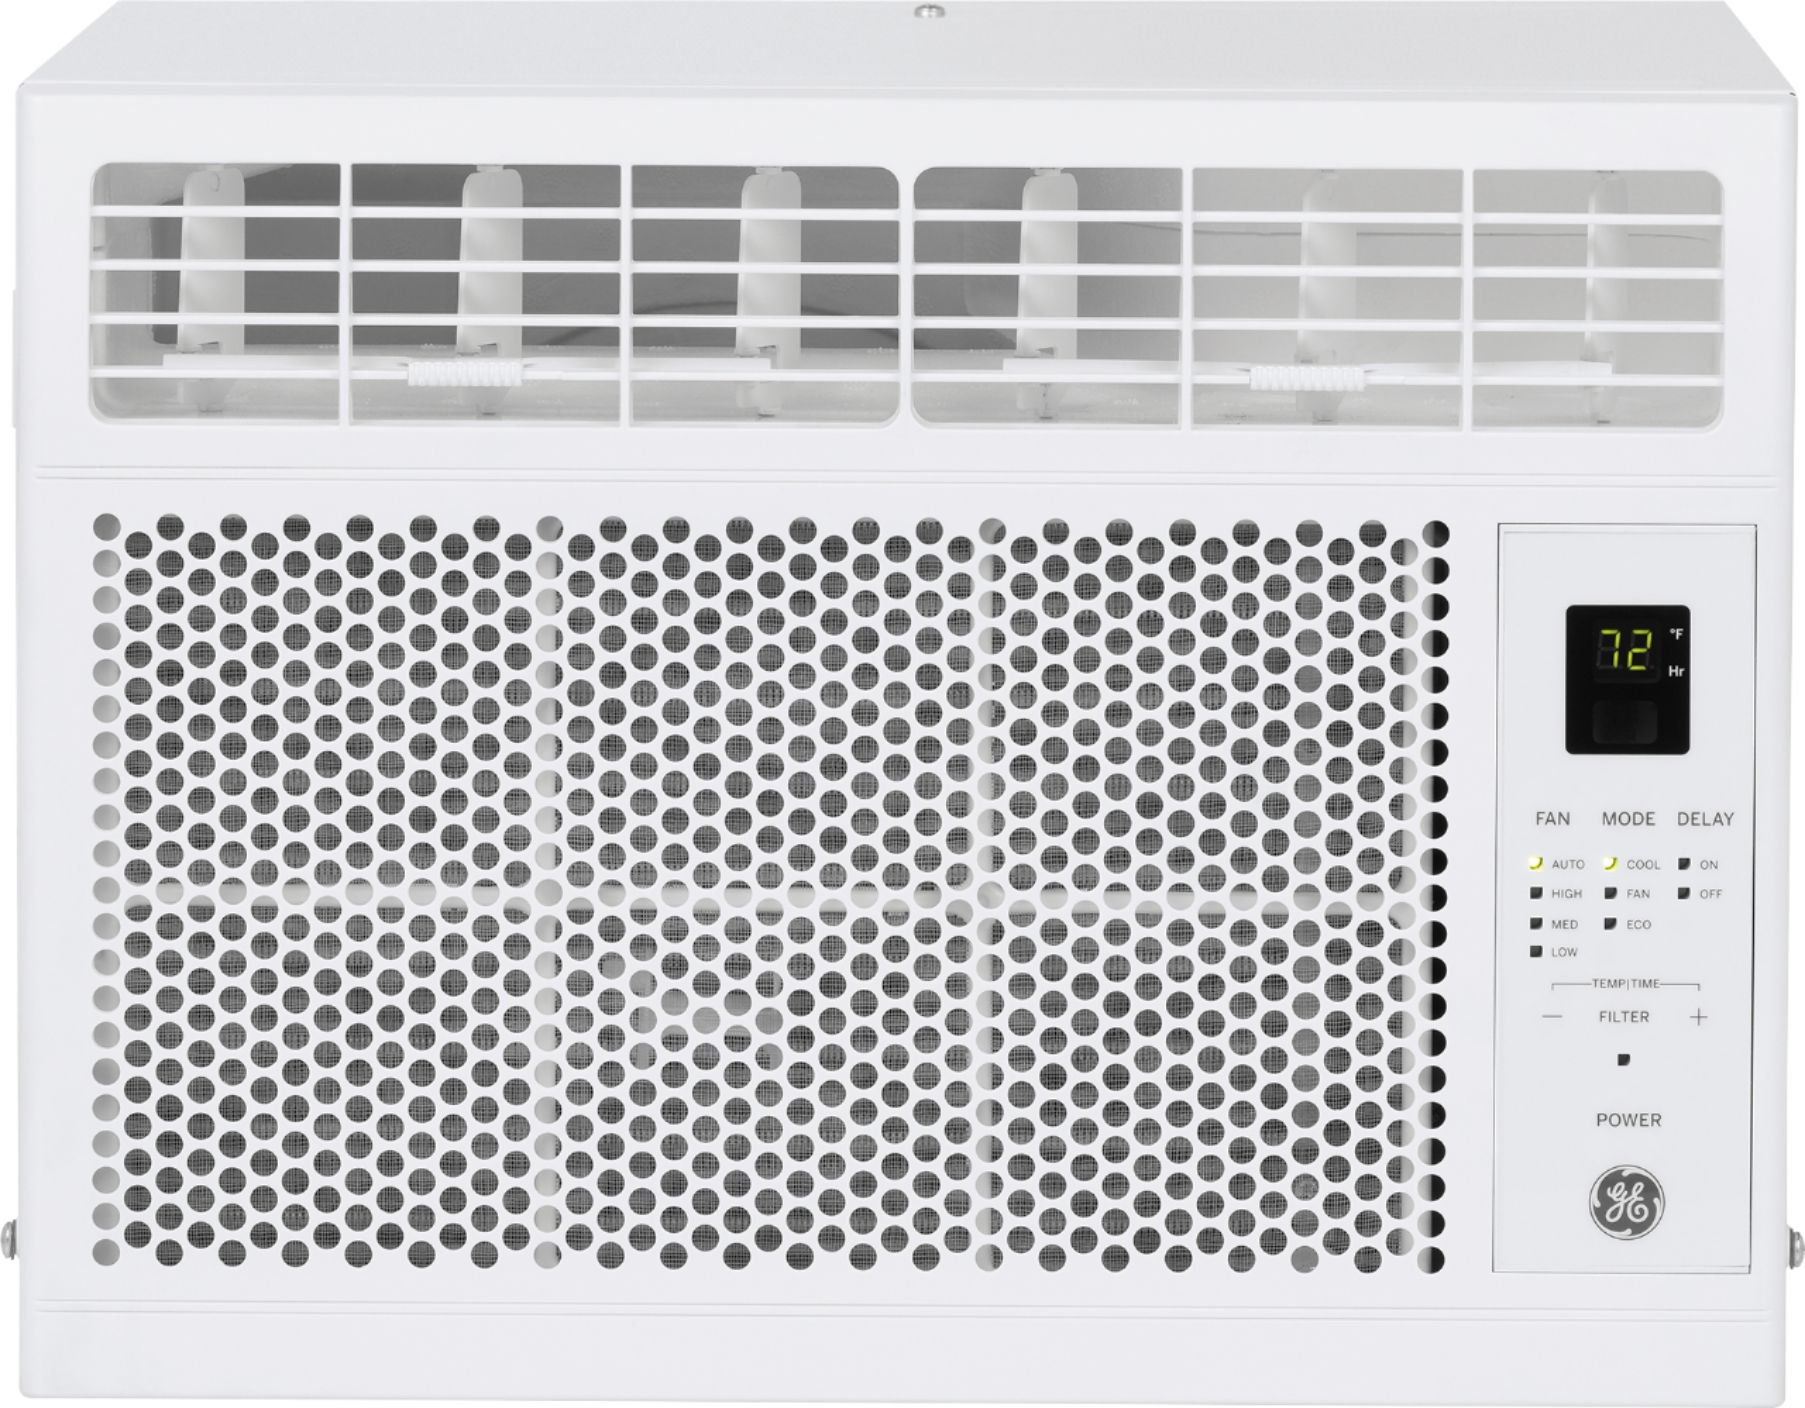 GE - 250 Sq. Ft. 6,000 BTU Window Air Conditioner - White $179.99